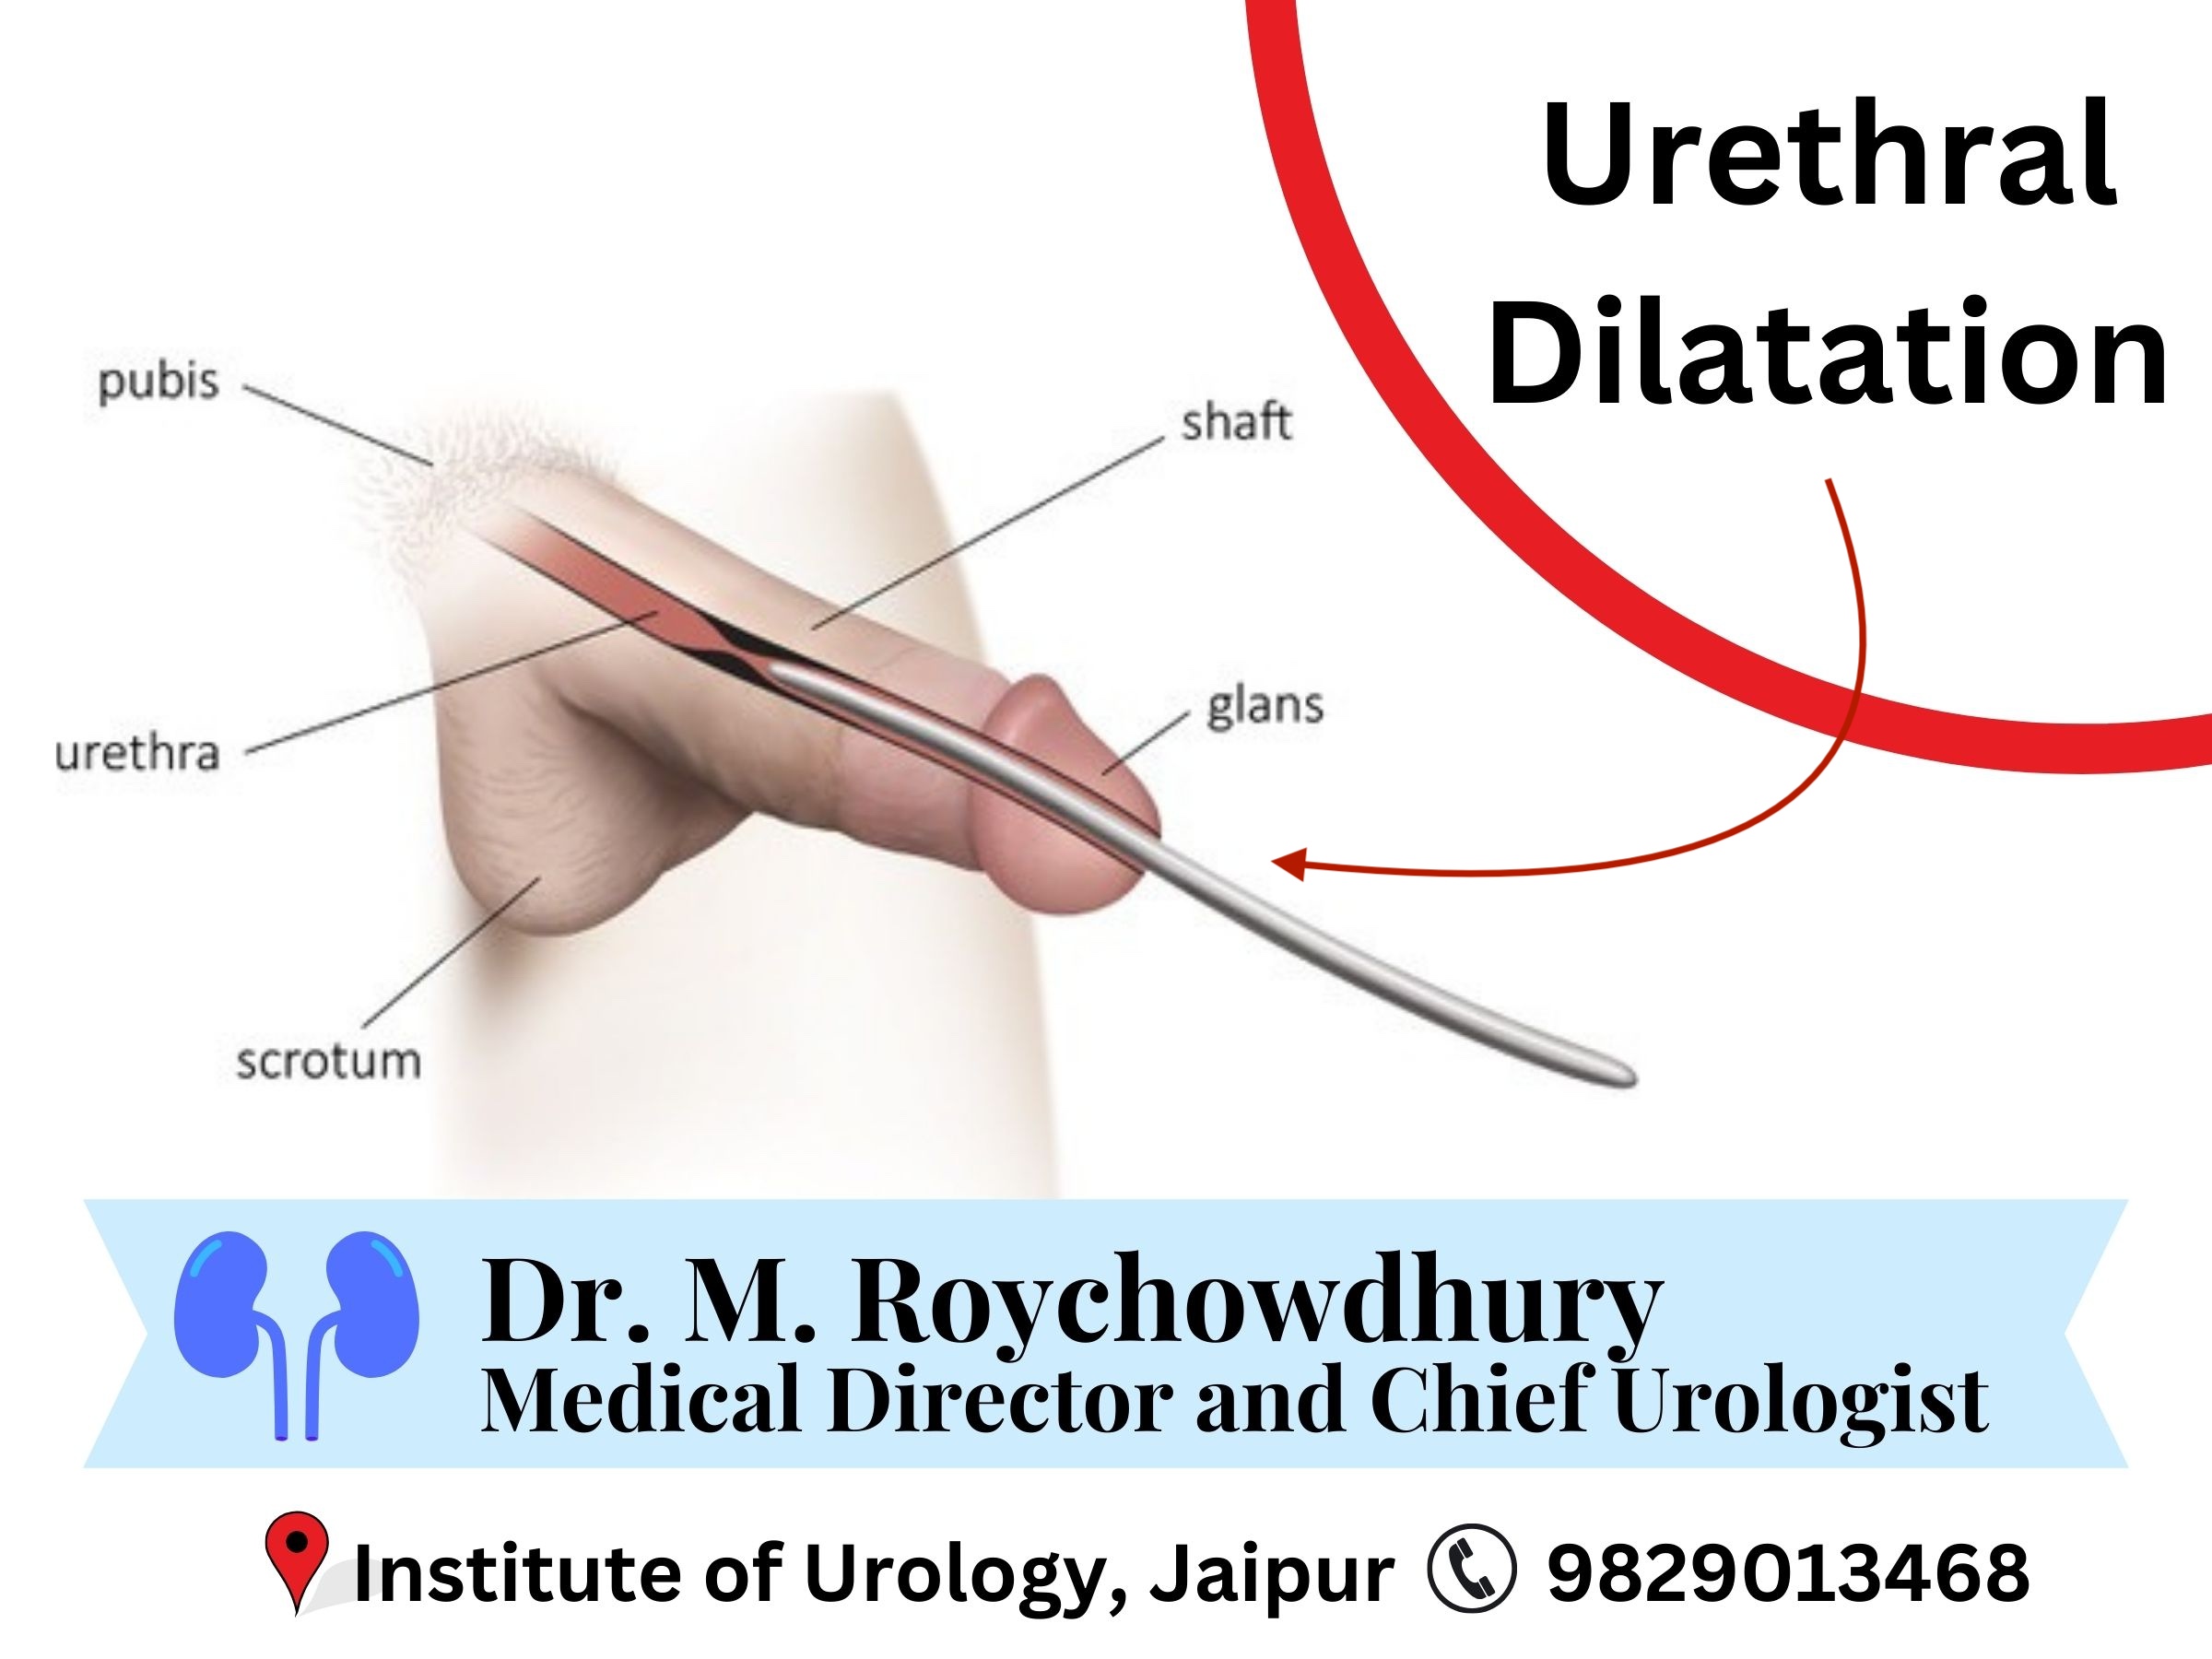 Urethral Dilatation A Non-Invasive OPD Procedure for Urological Strictures Dr M Roychowdhury Dr Rajan Bansal